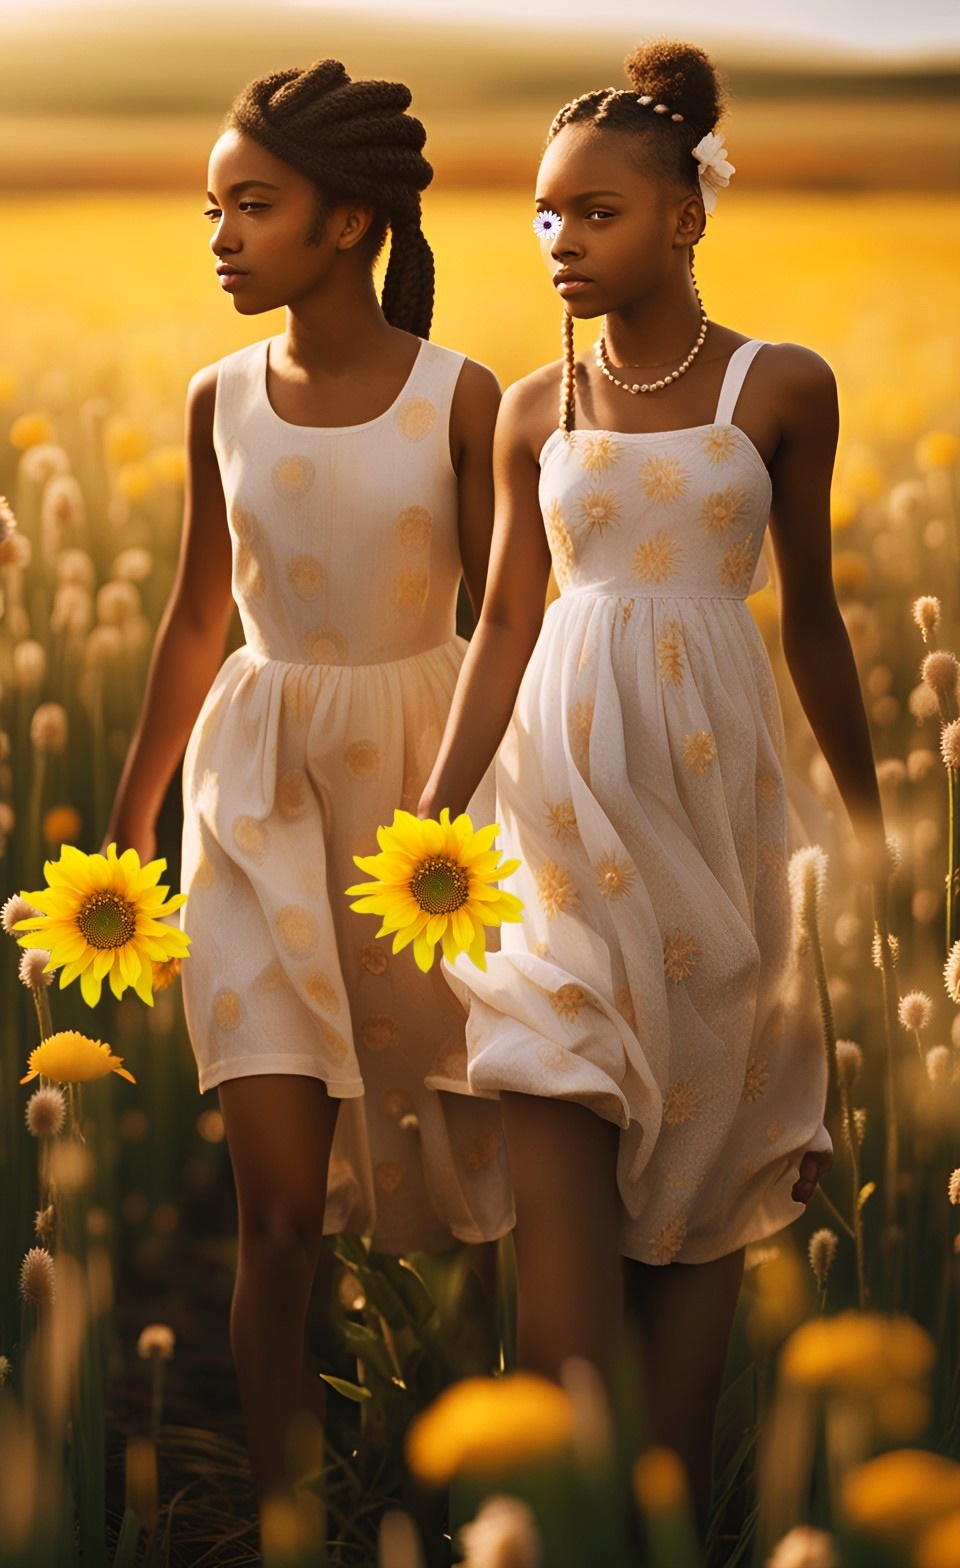 Jamaican little girls in flower field wearing dresses Jamaic86